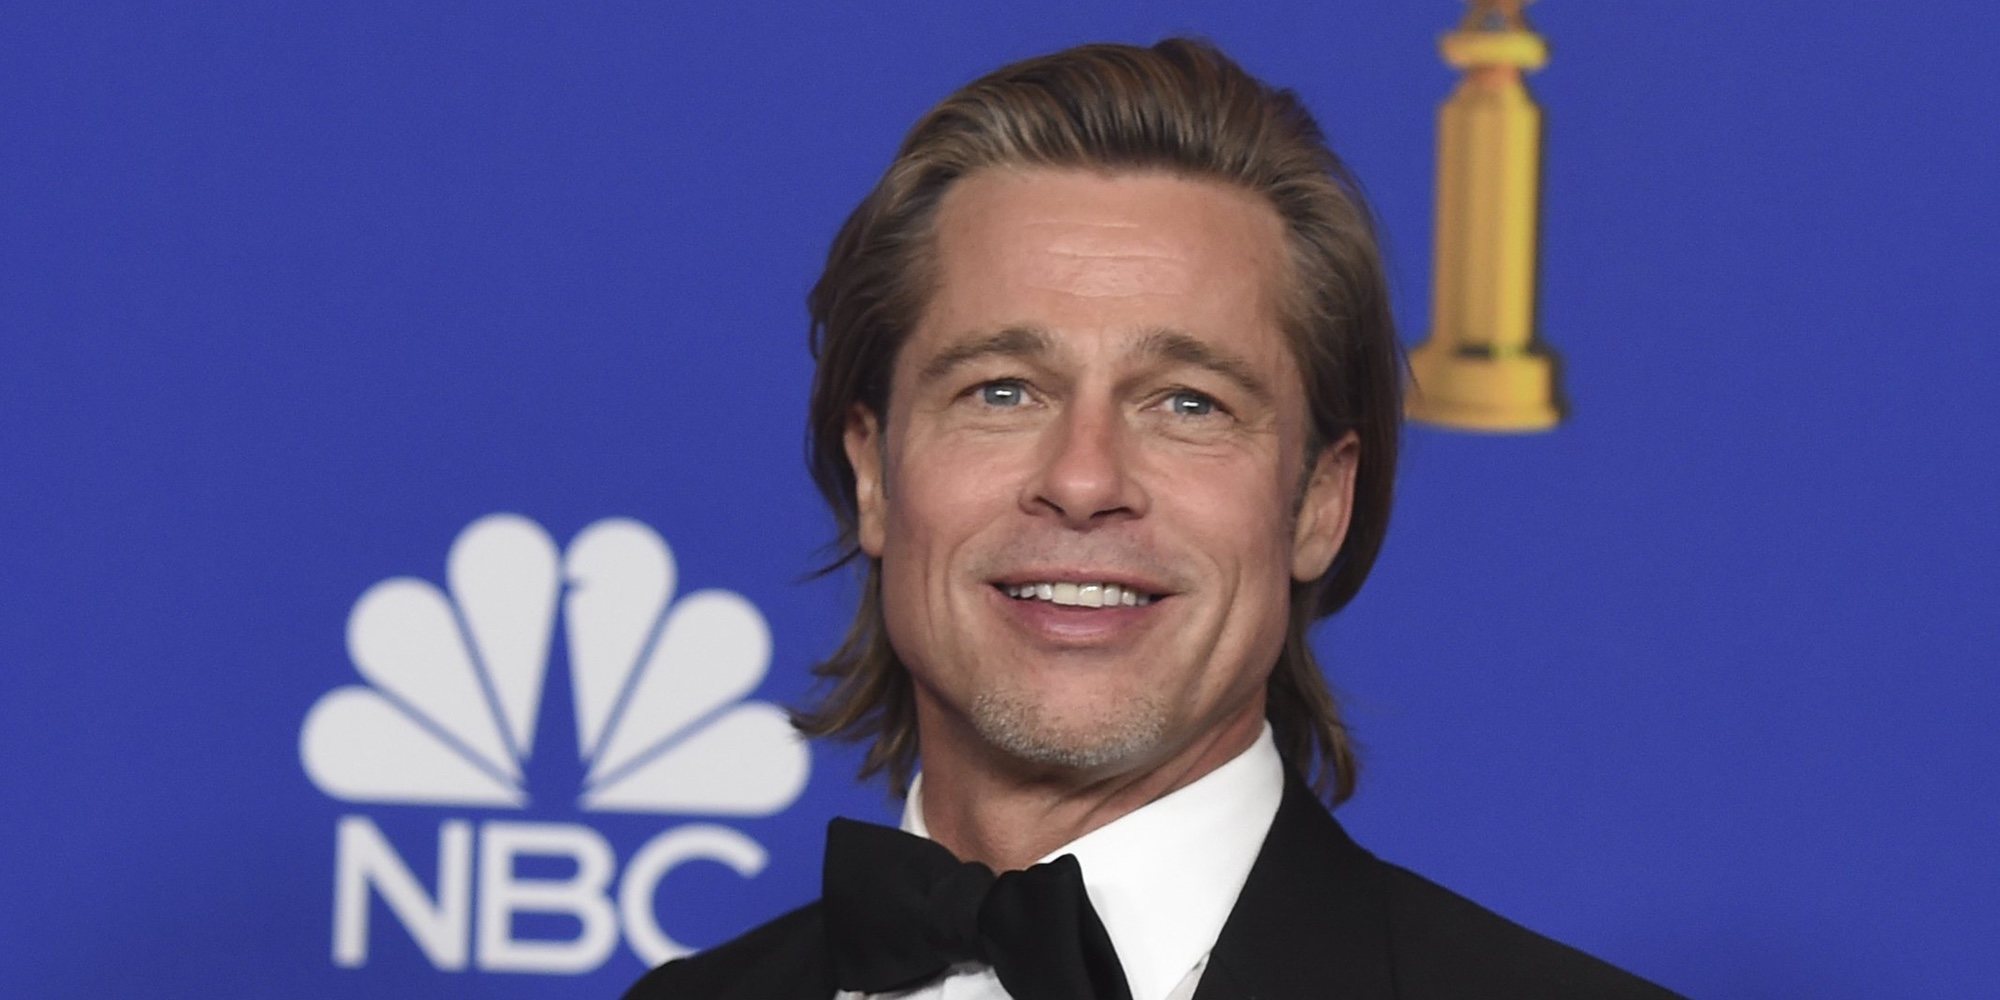 El motivo de la ausencia de Brad Pitt en los premios BAFTA 2020